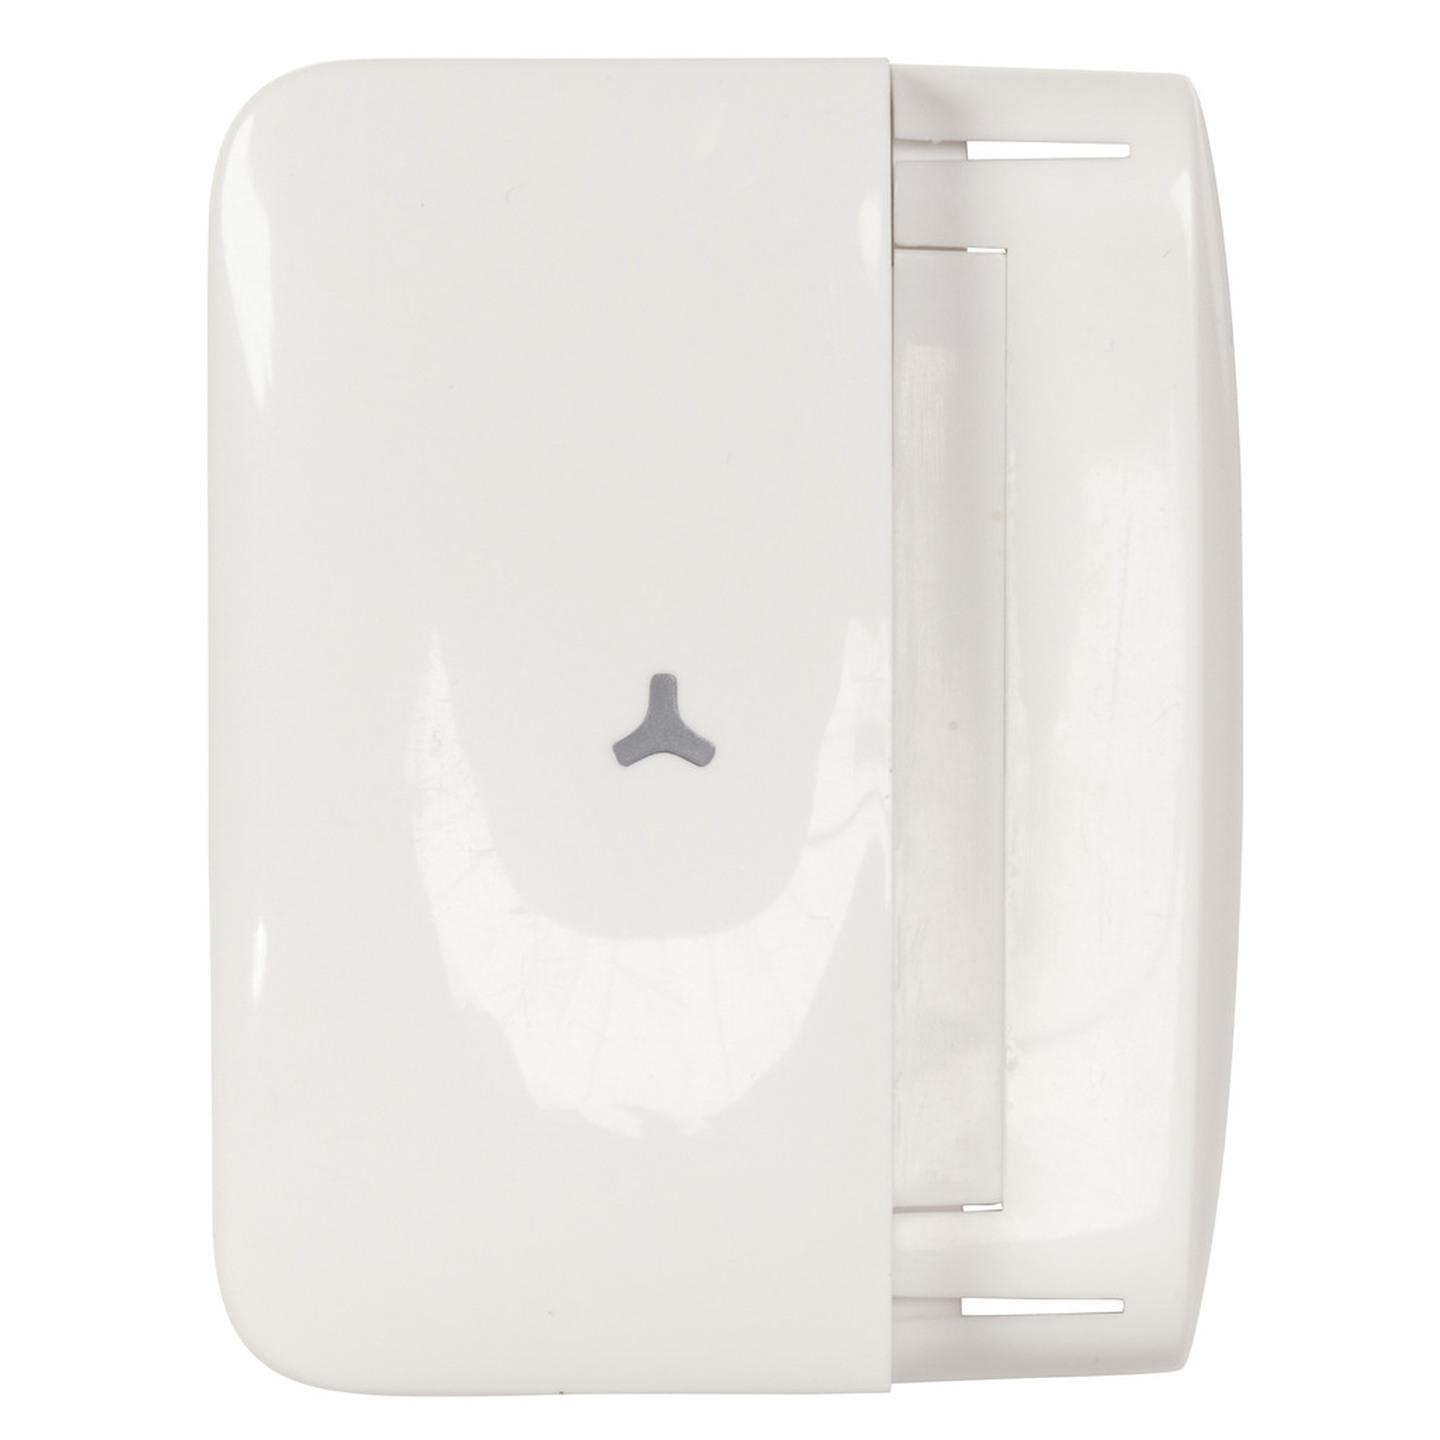 Concord Wireless Door Sensor for LA5900 4G/Wi-Fi Alarm